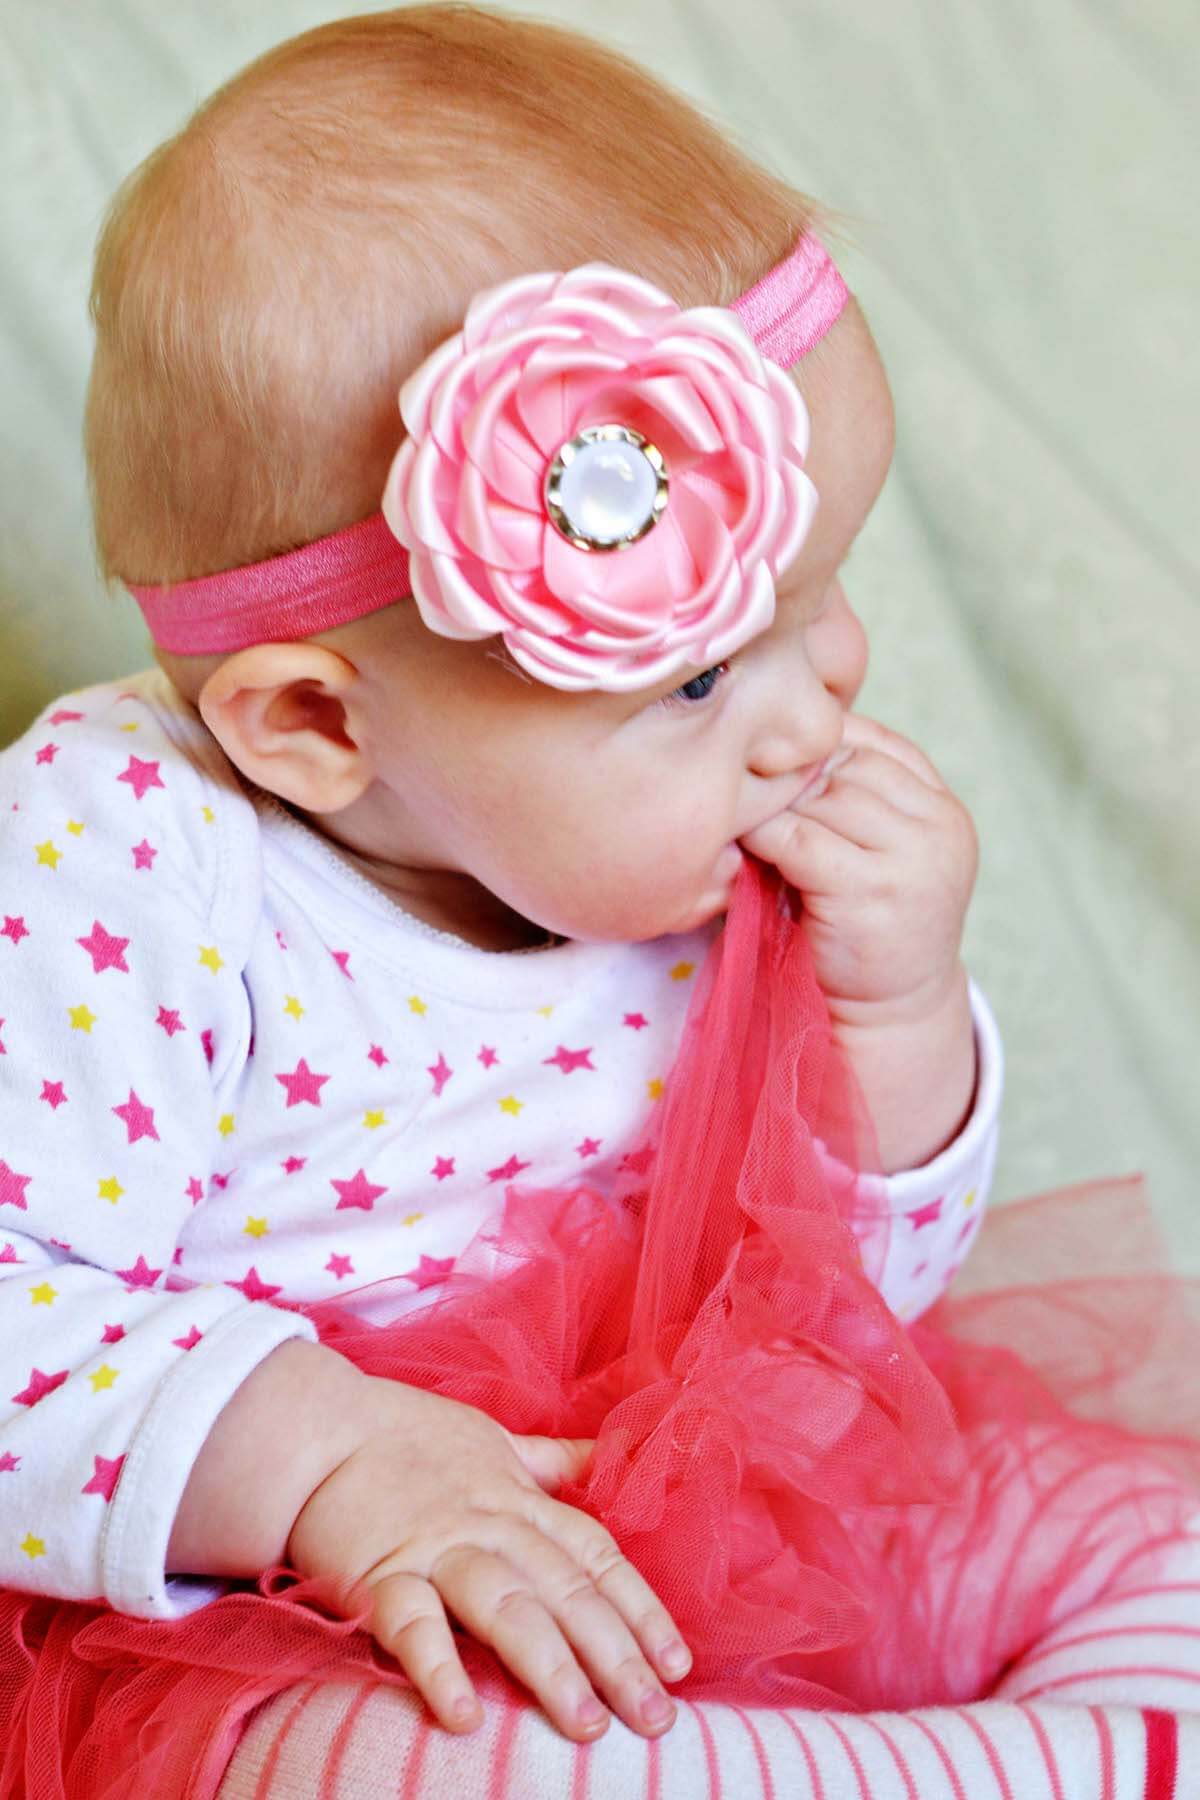 Baby girl with pink flower headband